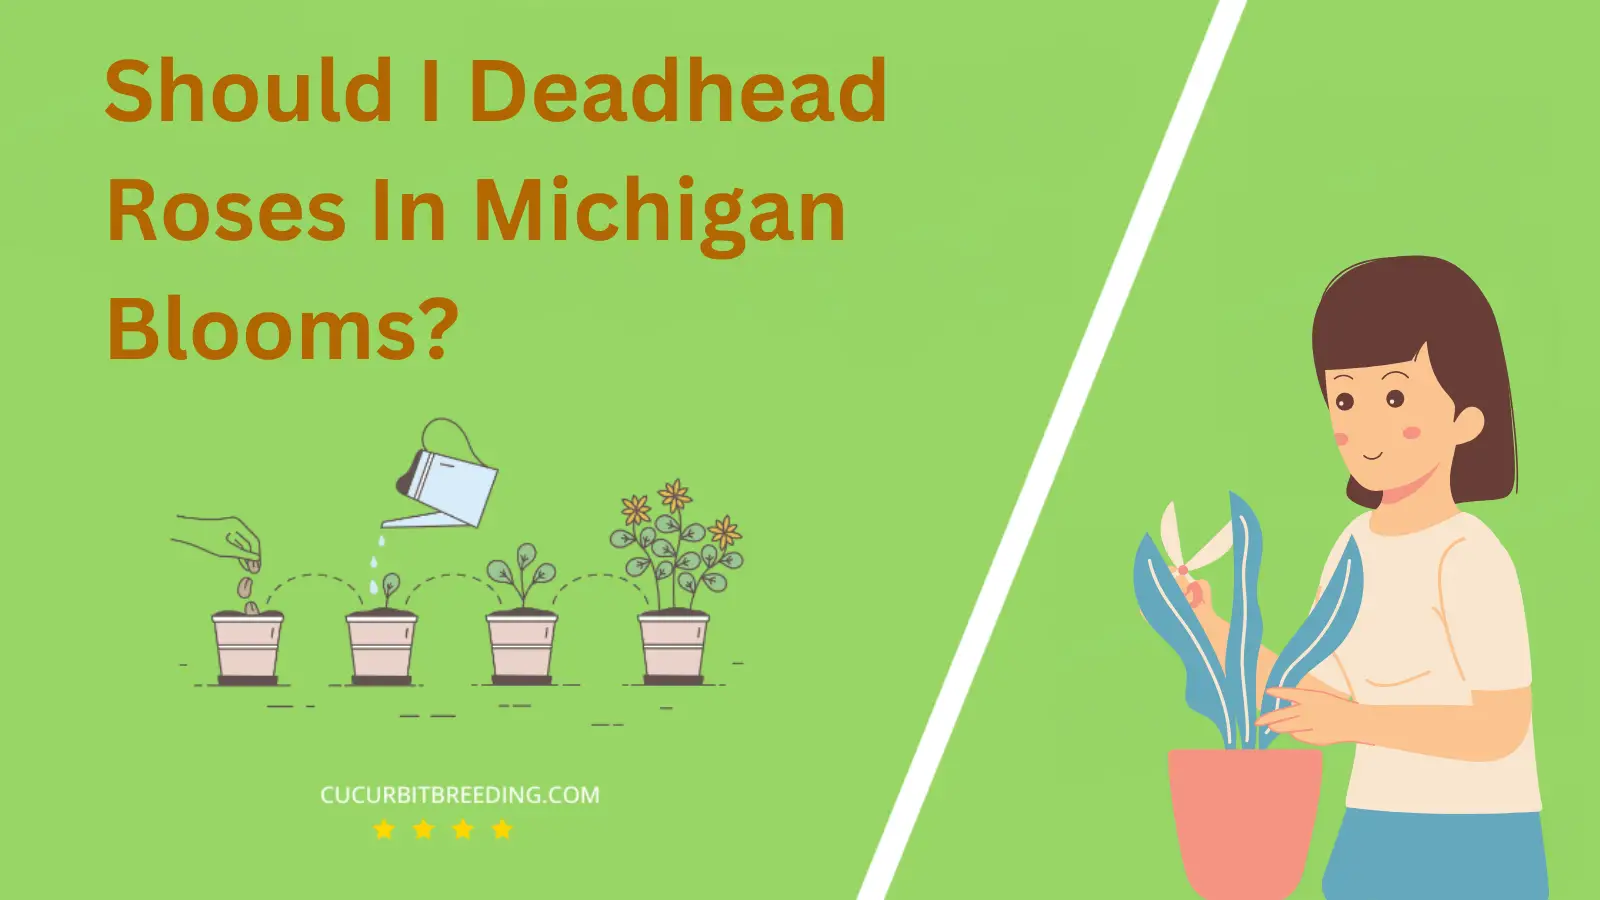 Should I Deadhead Roses In Michigan Blooms?